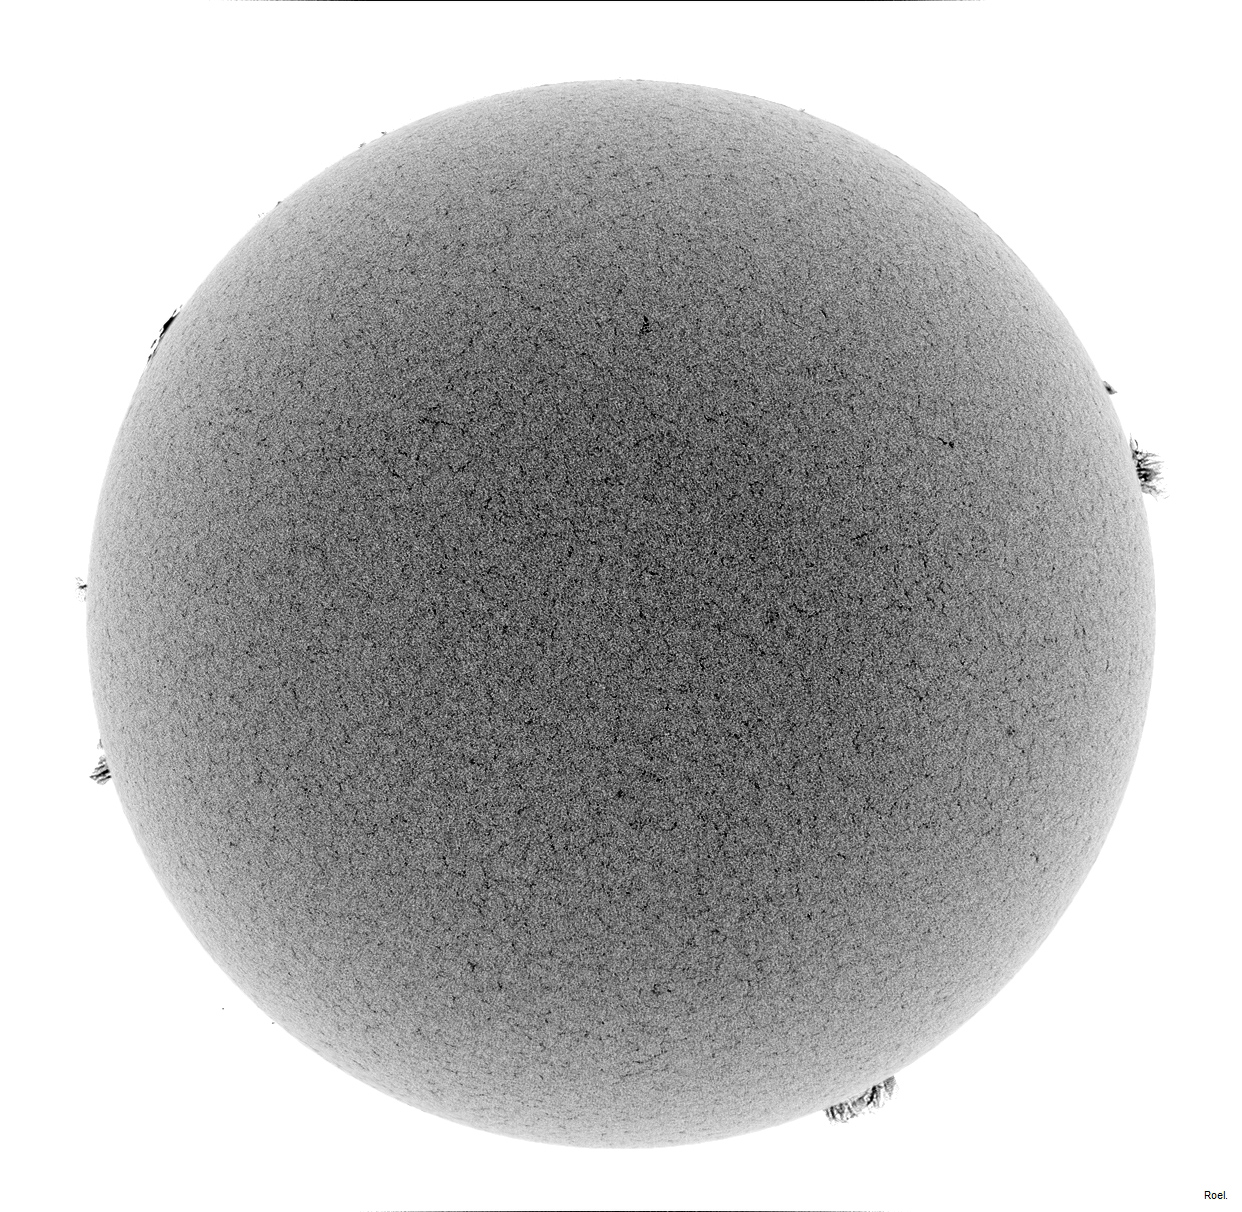 Sol del 3 de mayo del 2019-Meade-CaK-PSTmod-2neg.jpg